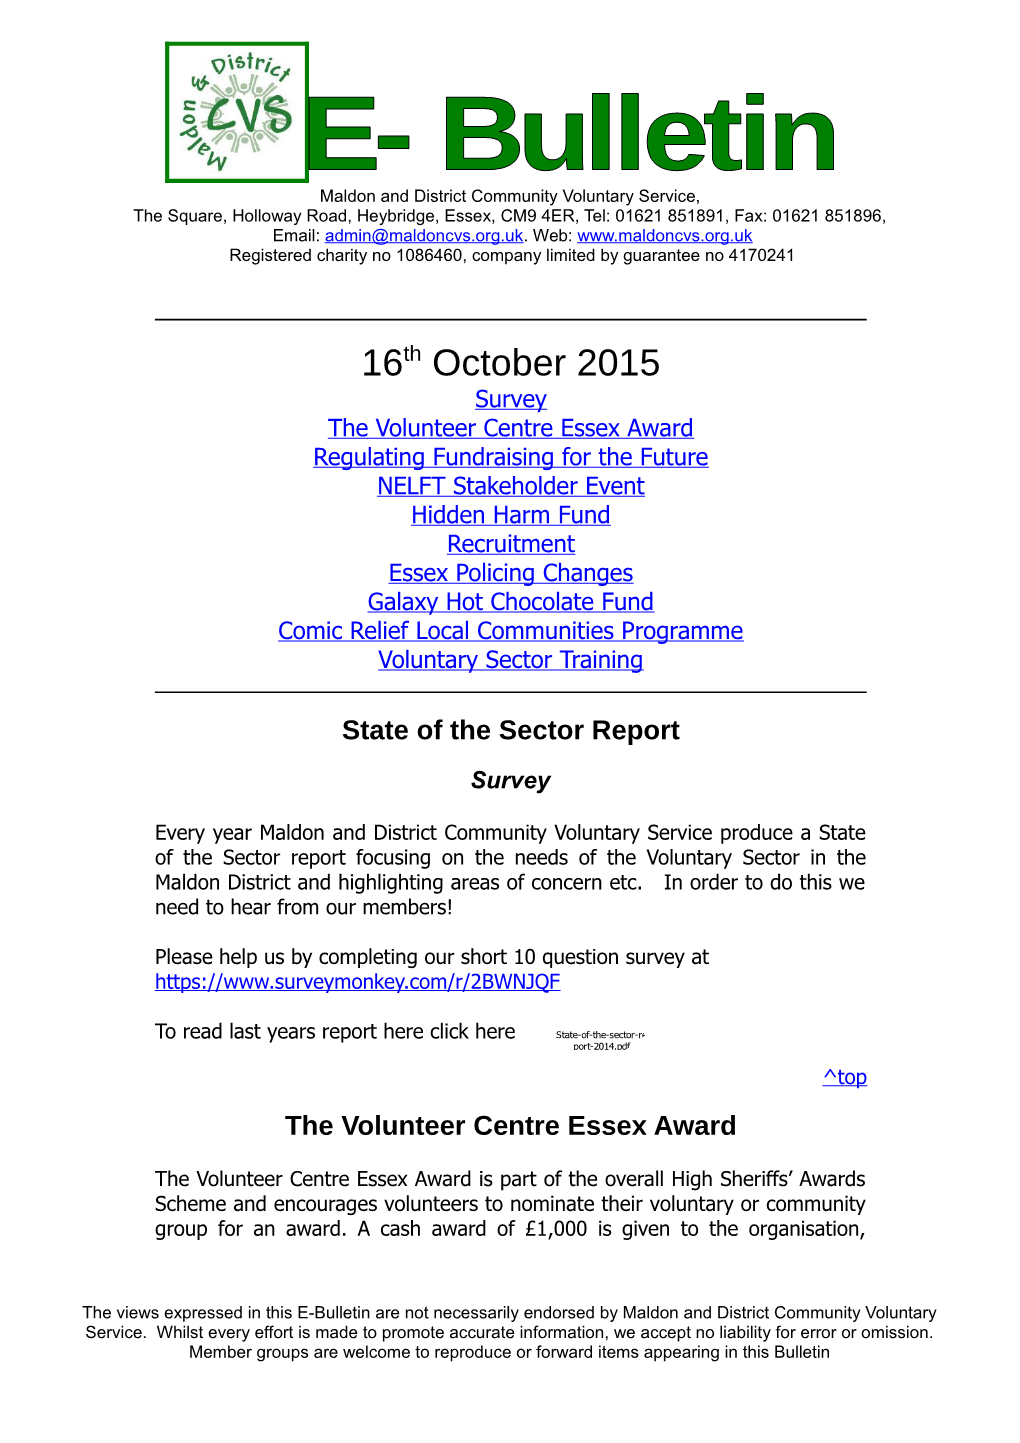 The Volunteer Centre Essex Award